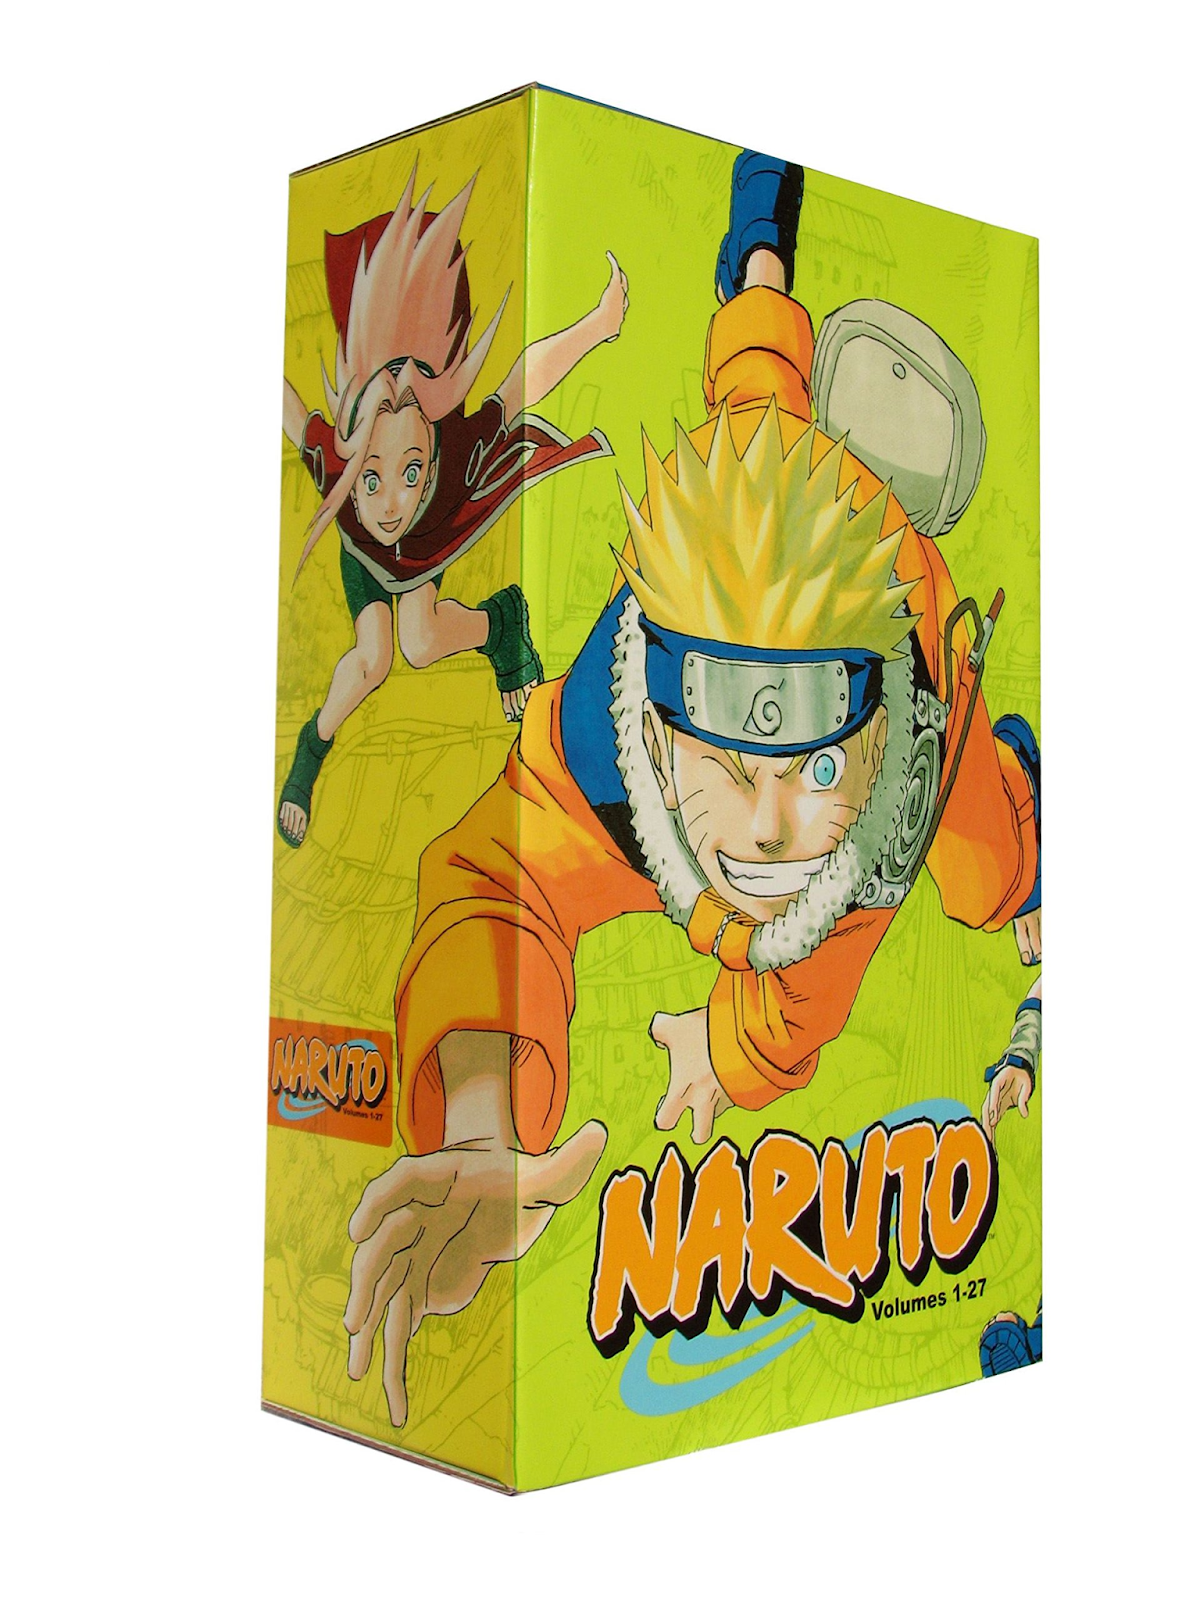 Naruto 1st box set is really impressive. - Amazon 
